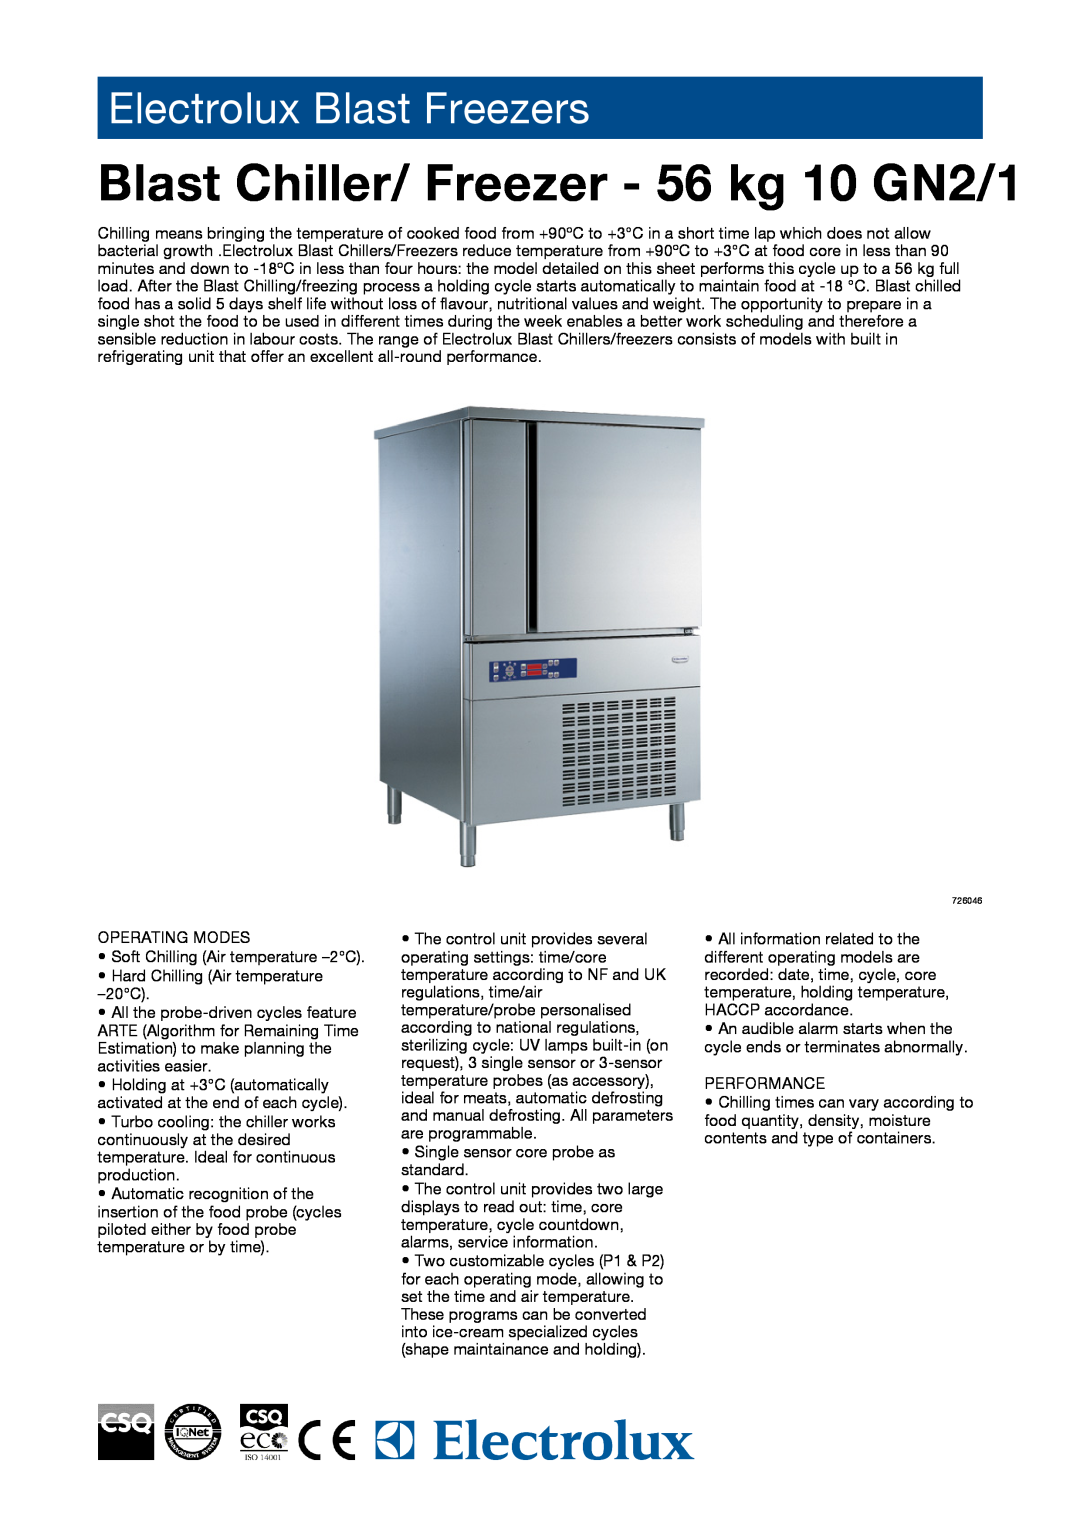 Electrolux 726046 manual Blast Chiller/ Freezer - 56 kg 10 GN2/1, Electrolux Blast Freezers 